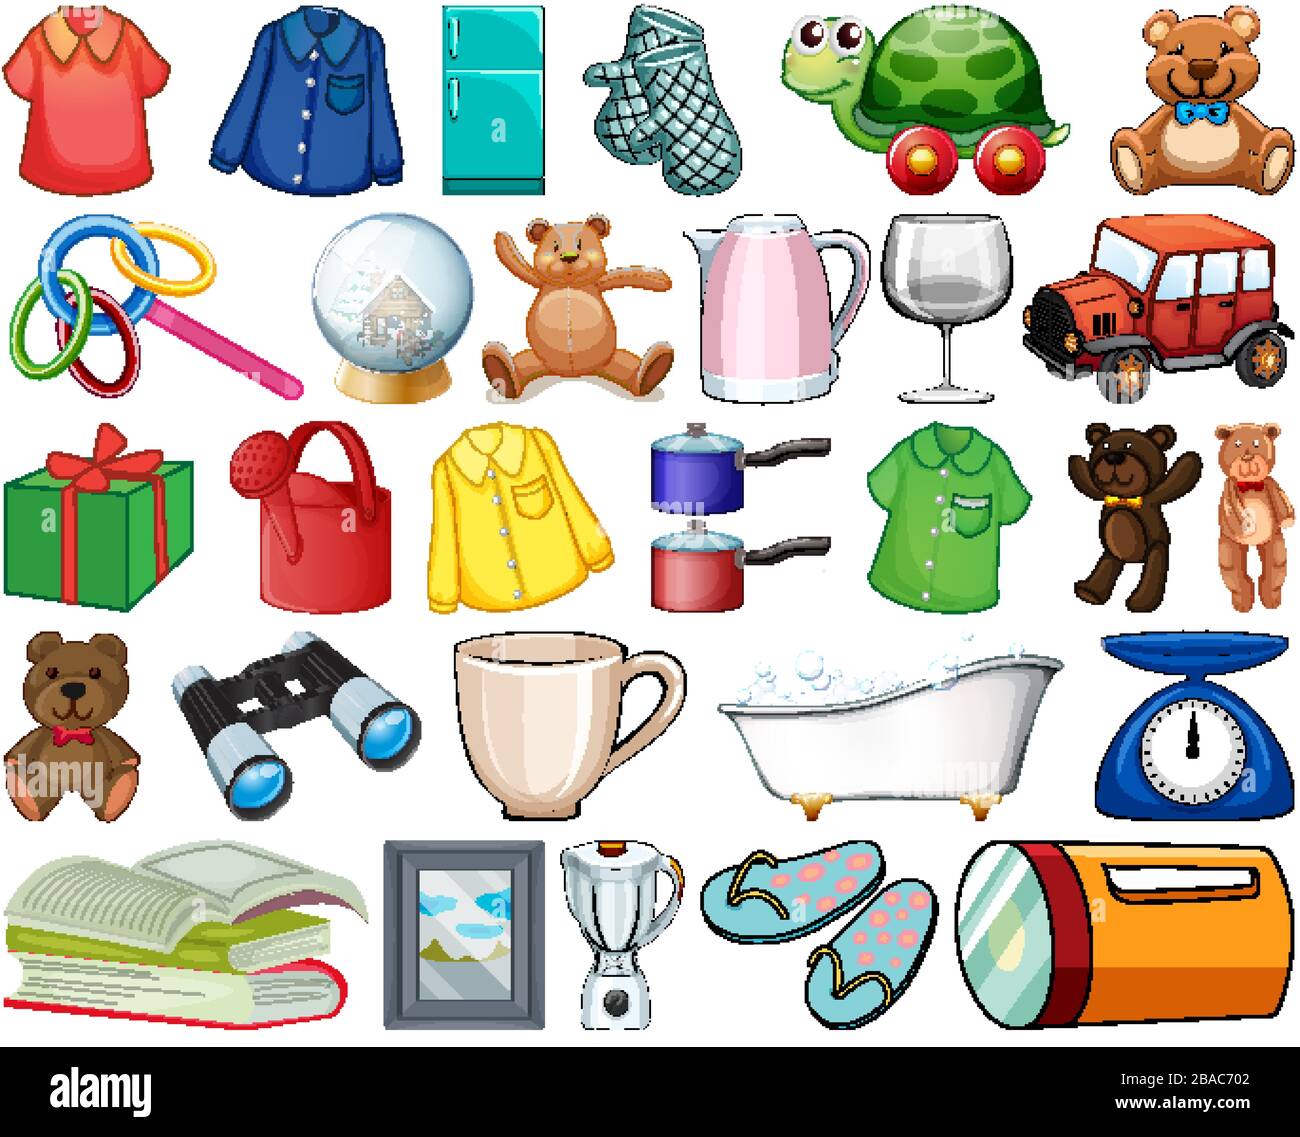 https://c8.alamy.com/comp/2BAC702/large-set-of-household-items-and-many-toys-on-white-background-illustration-2BAC702.jpg